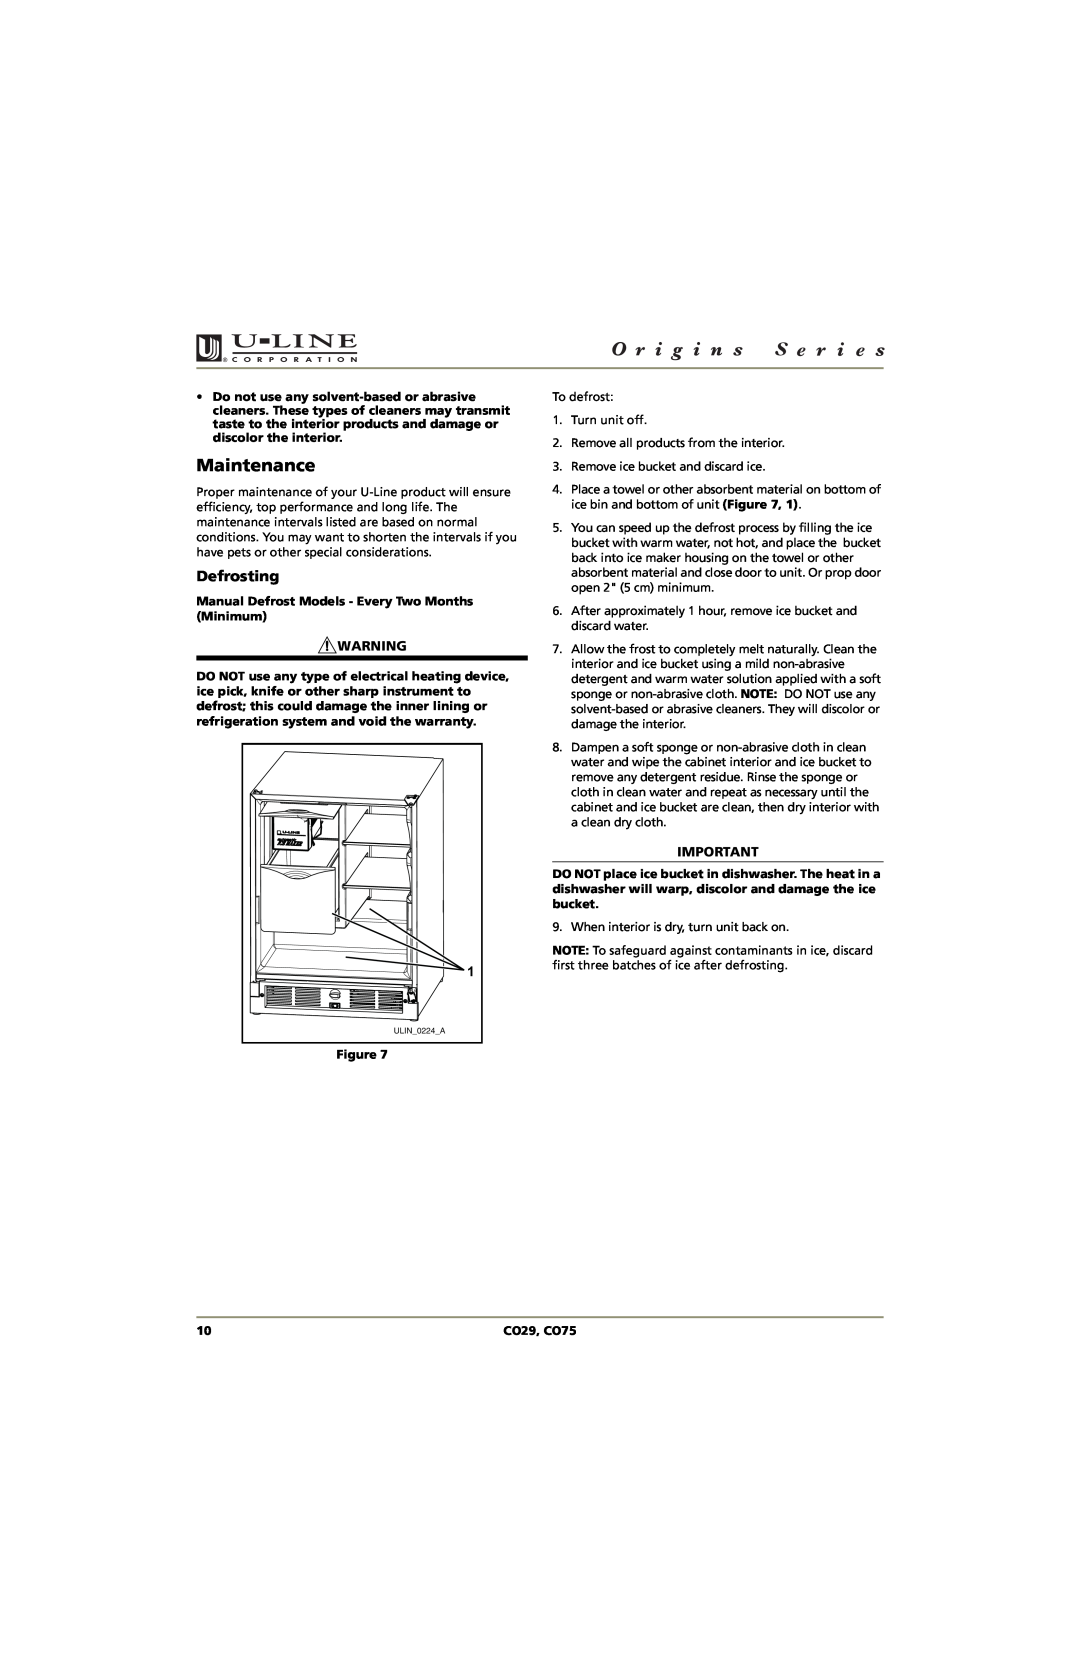 U-Line CO29, CO75 manual Maintenance, Defrosting 